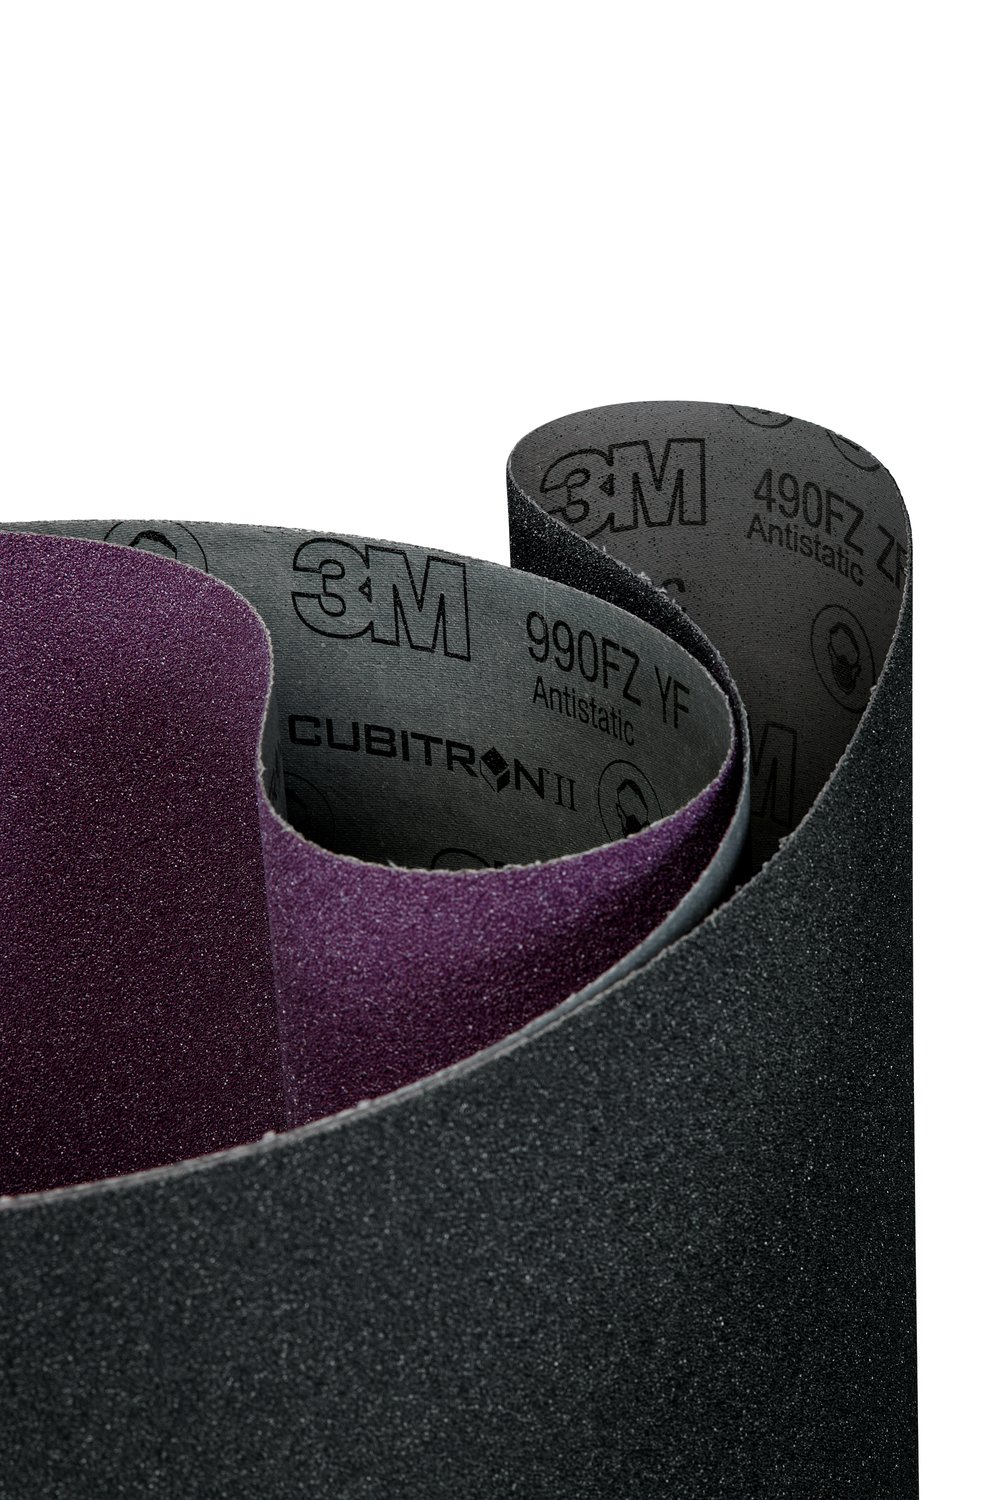 7010513175 - 3M SiC Cloth Belt 490FZ, P120 YF-weight, 6 in x 48 in, Film-lok,
Single-flex